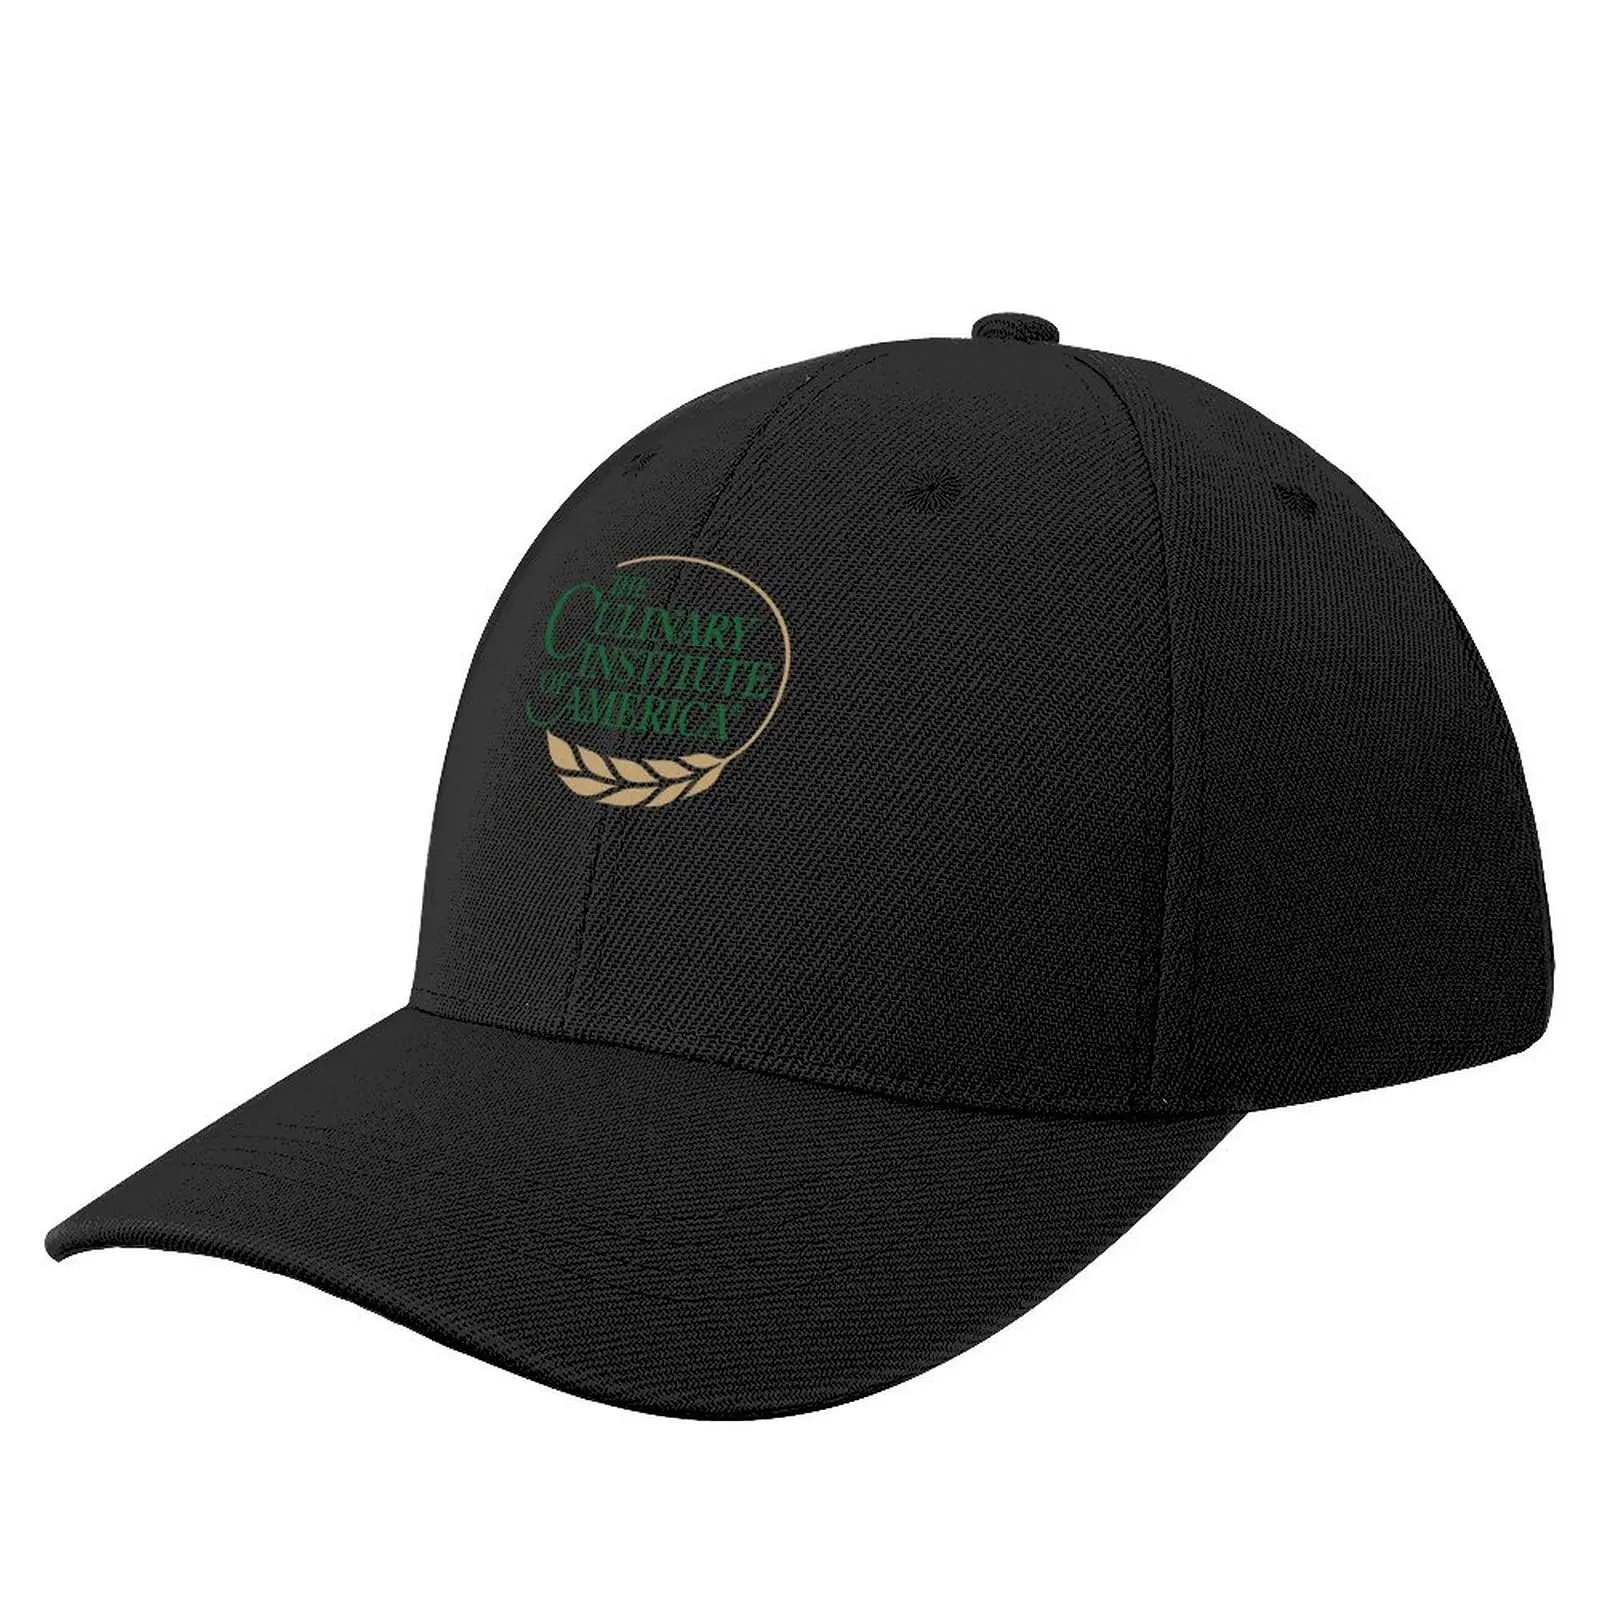 

Cia (the culinary institute of america) classic t shirt Baseball Cap Golf Hat Man hard hat Men Hats Women's